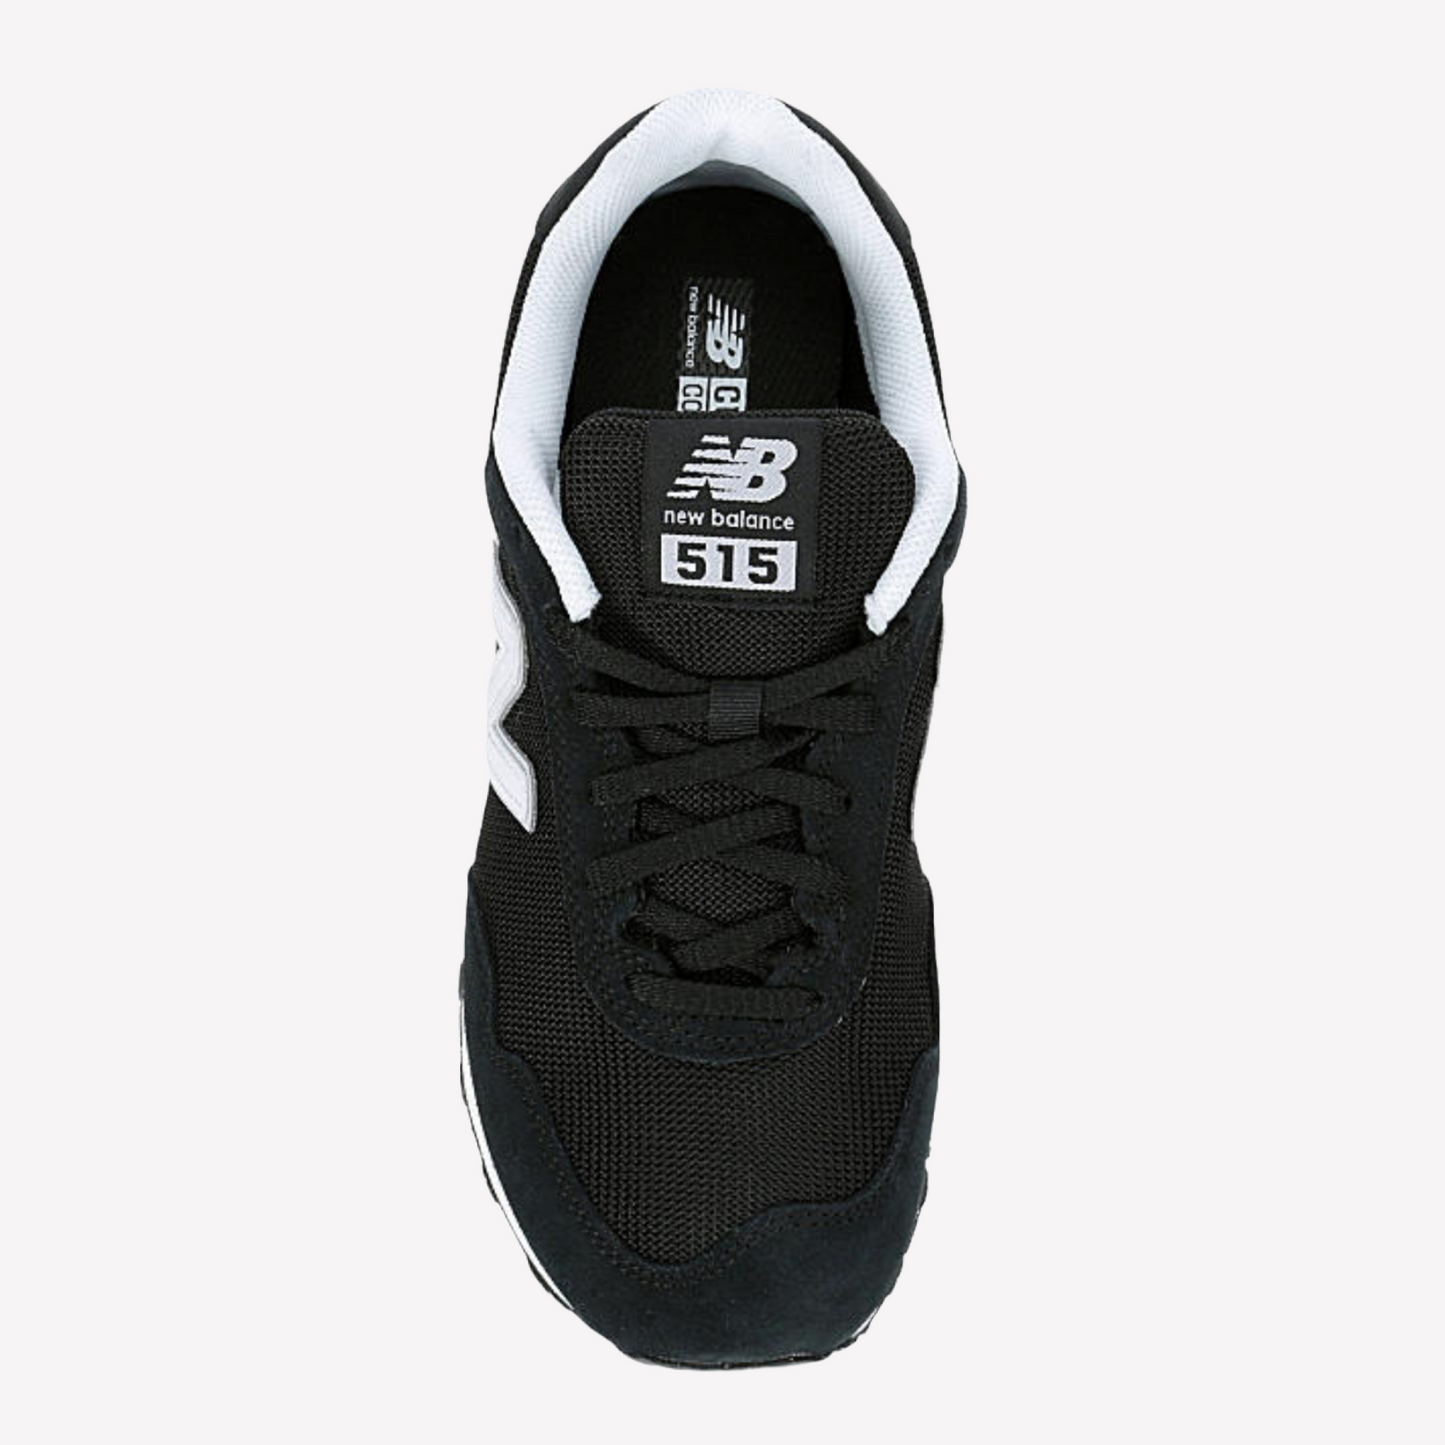 New Balance Men 515 Sneaker - Black